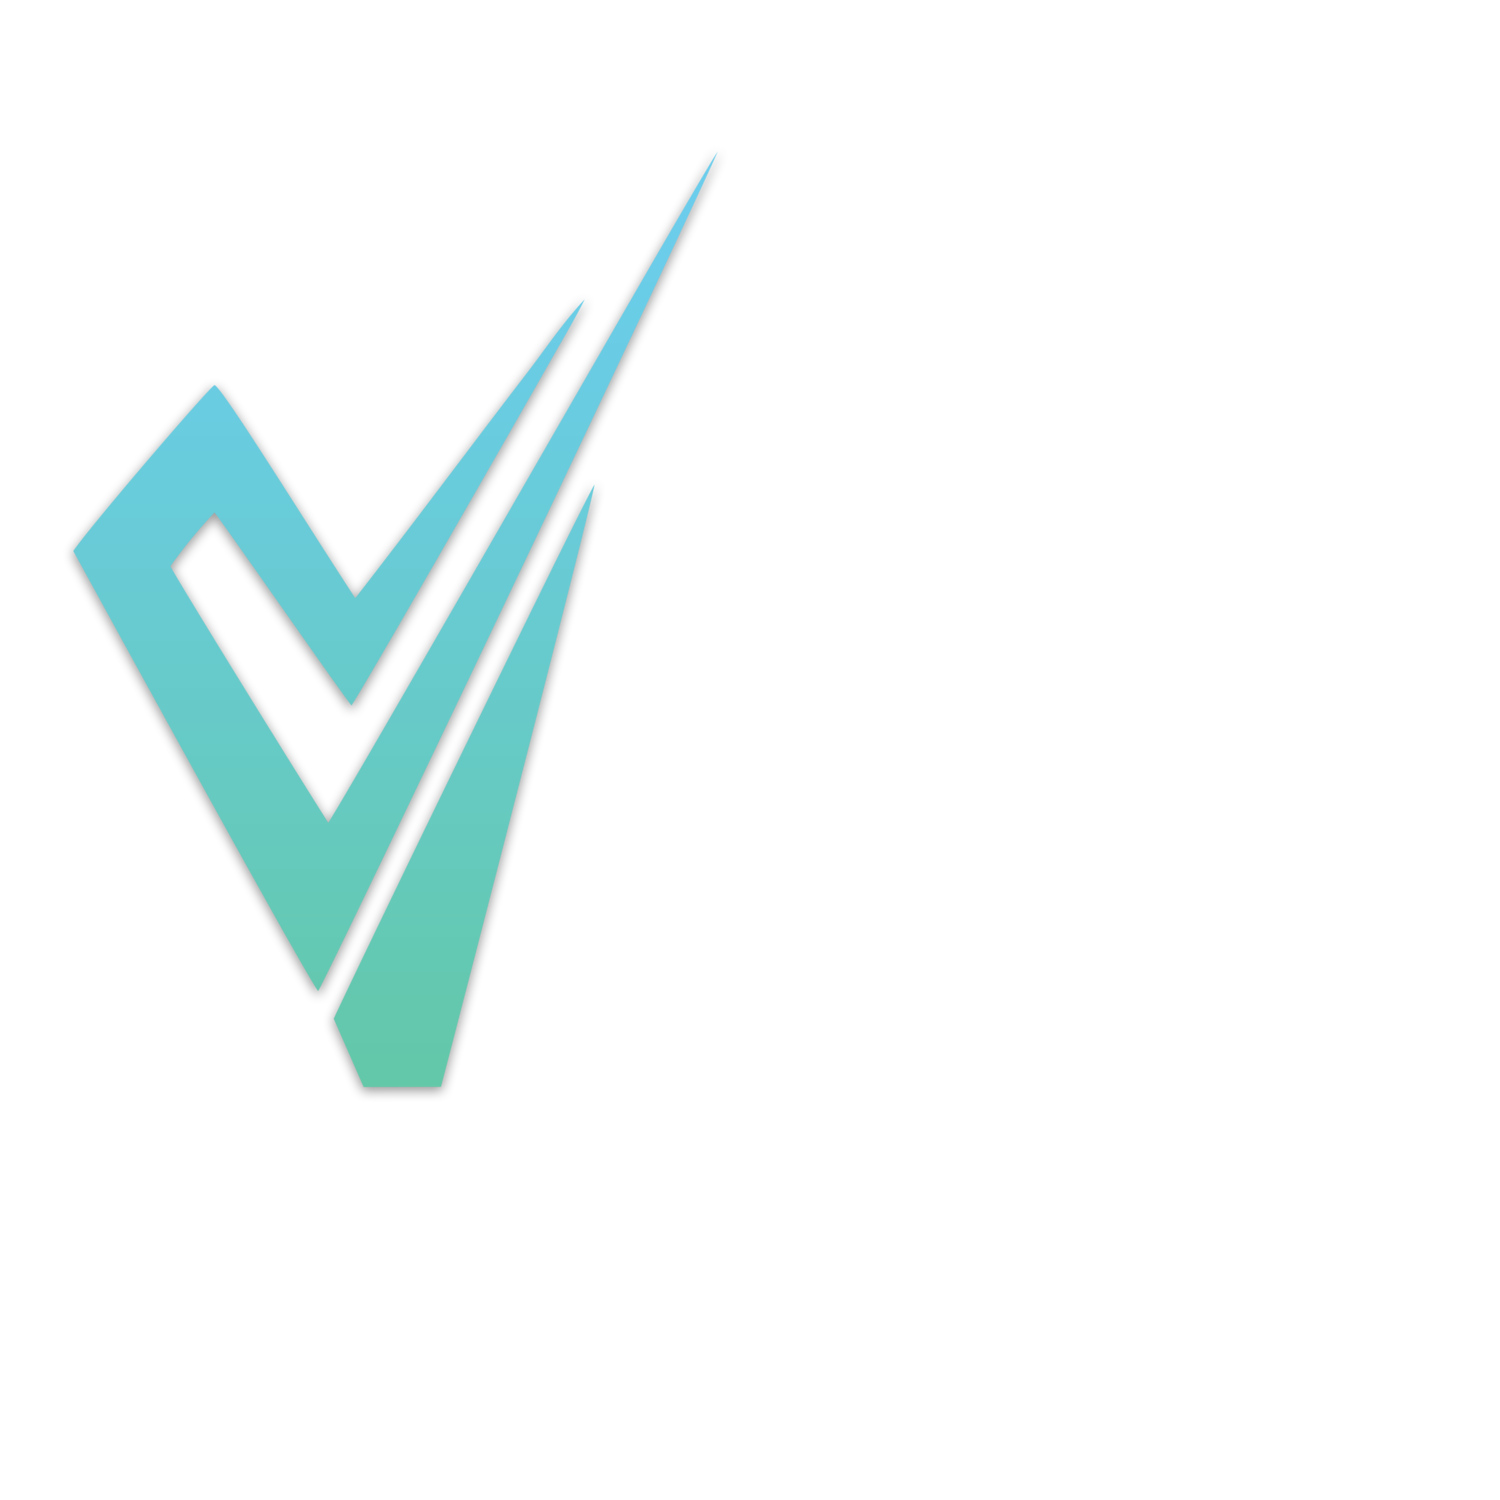 VTest Laboratory